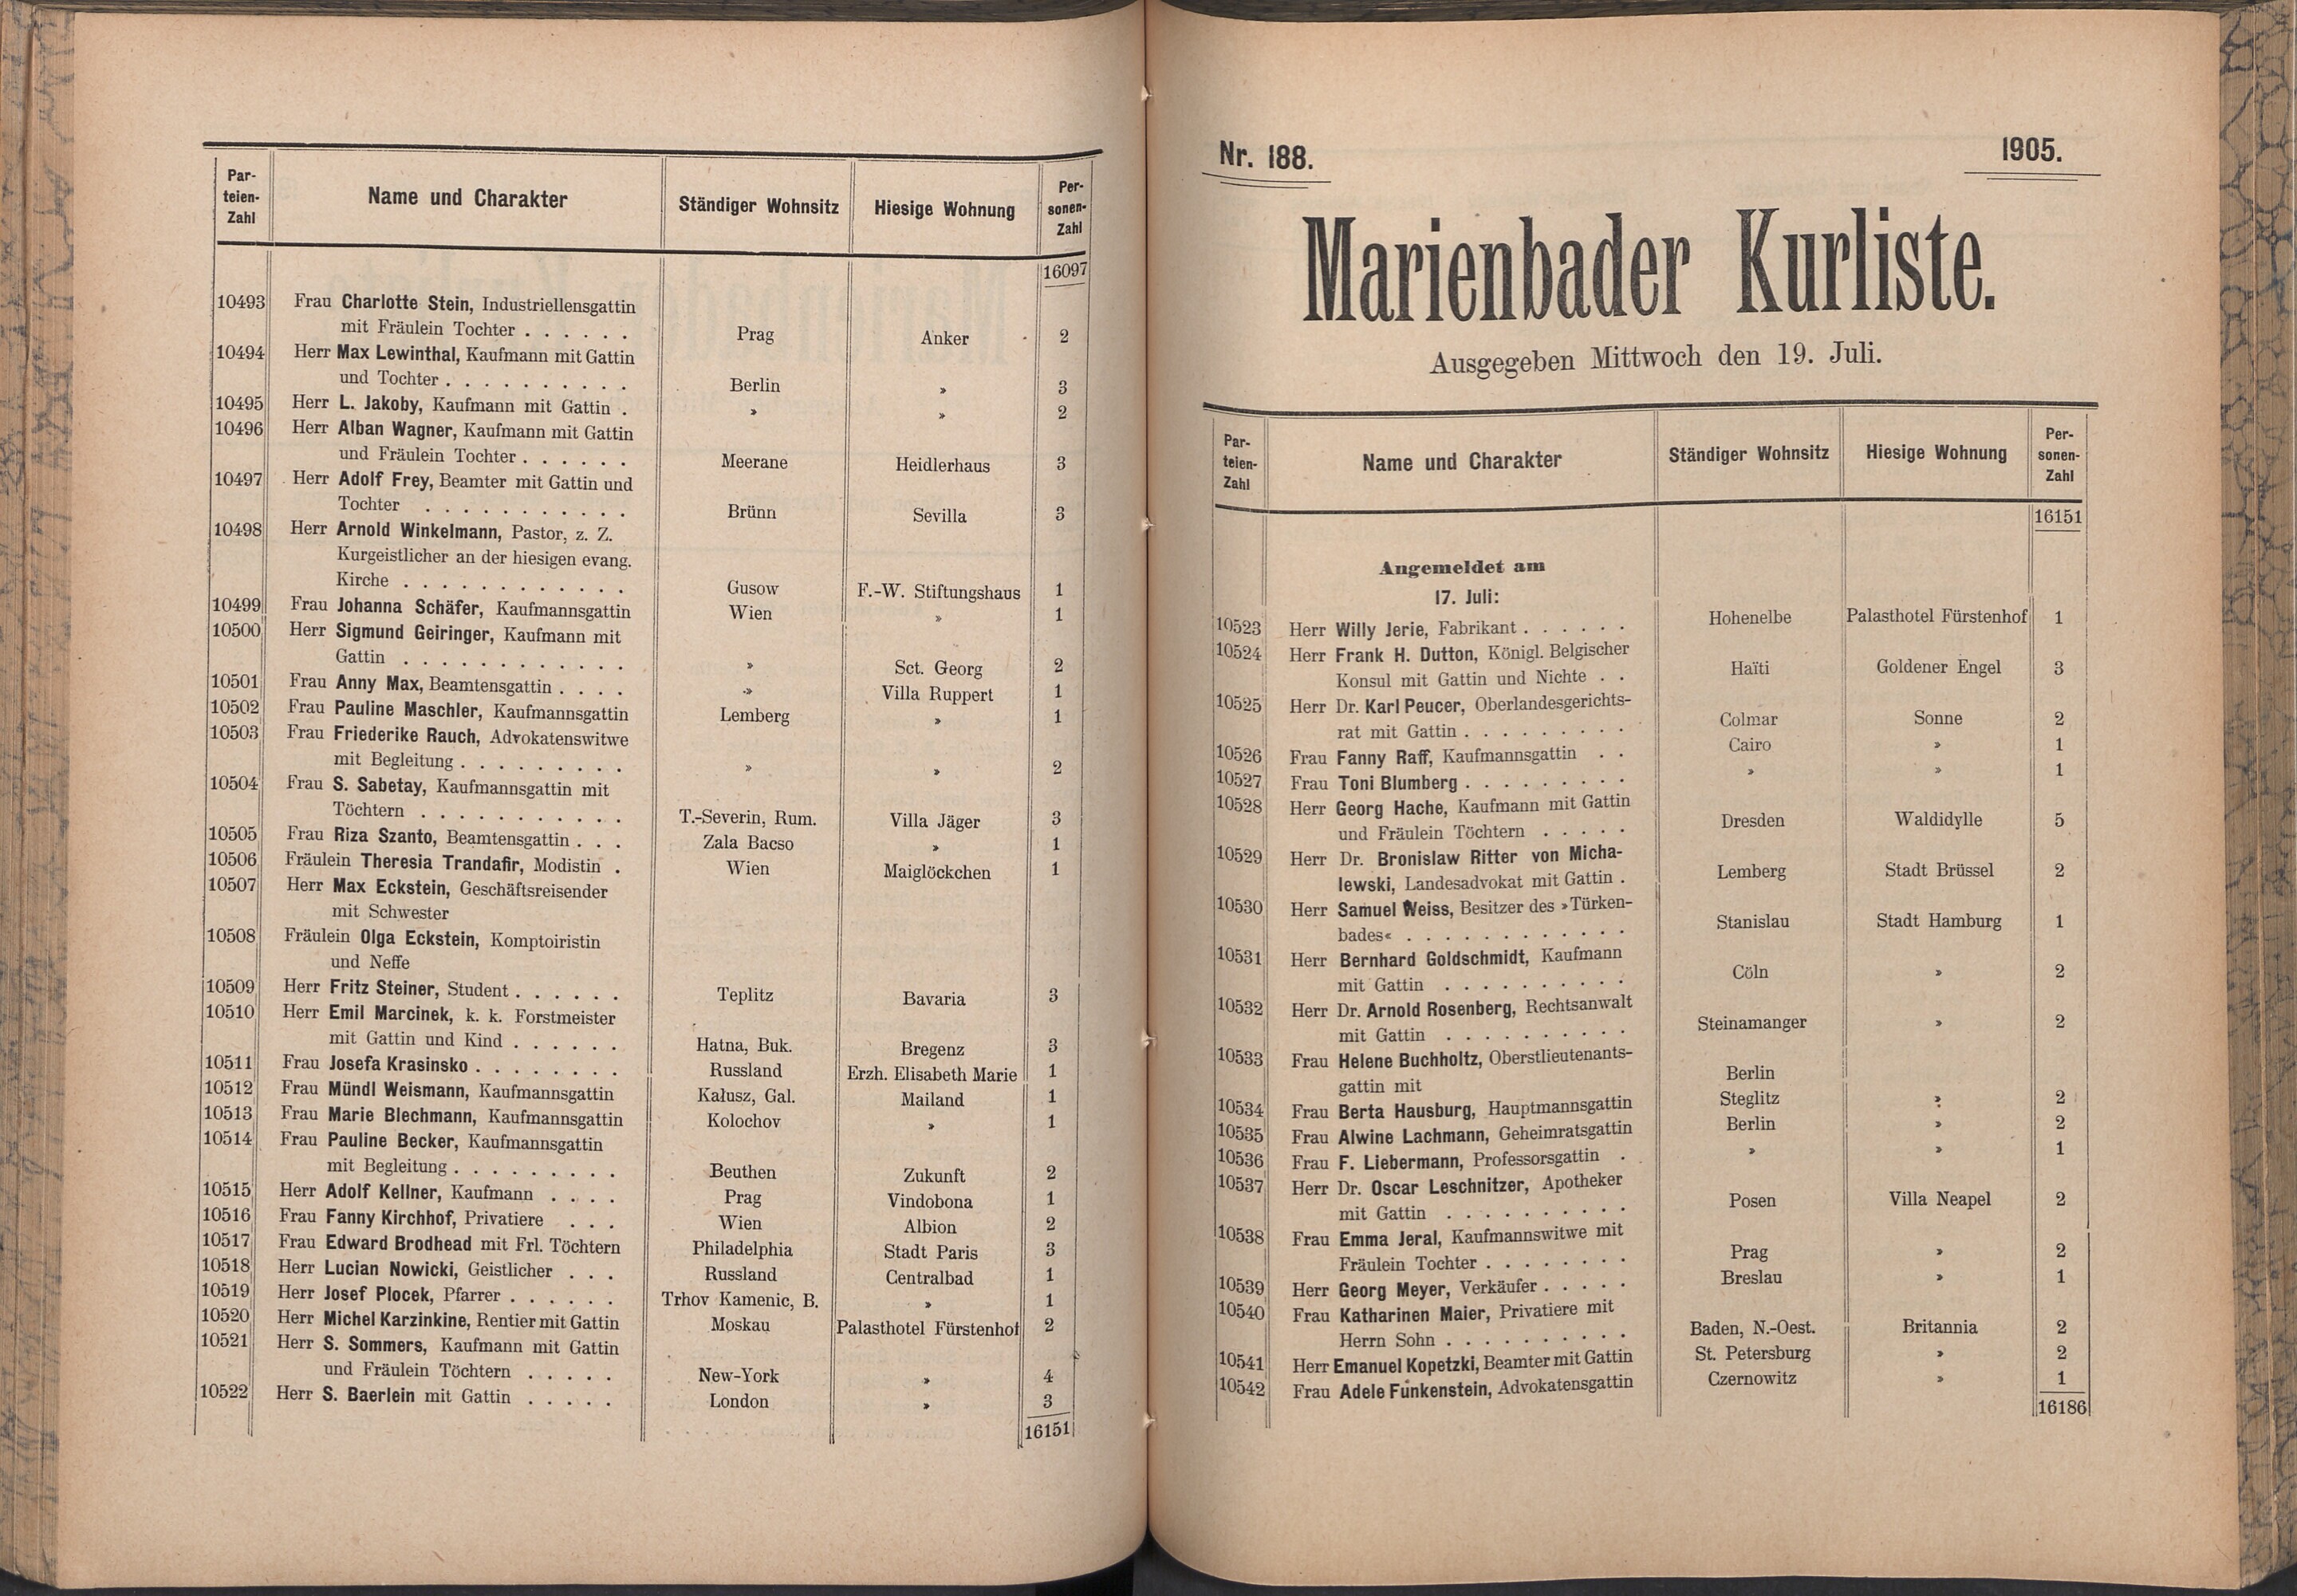 263. soap-ch_knihovna_marienbader-kurliste-1905_2630